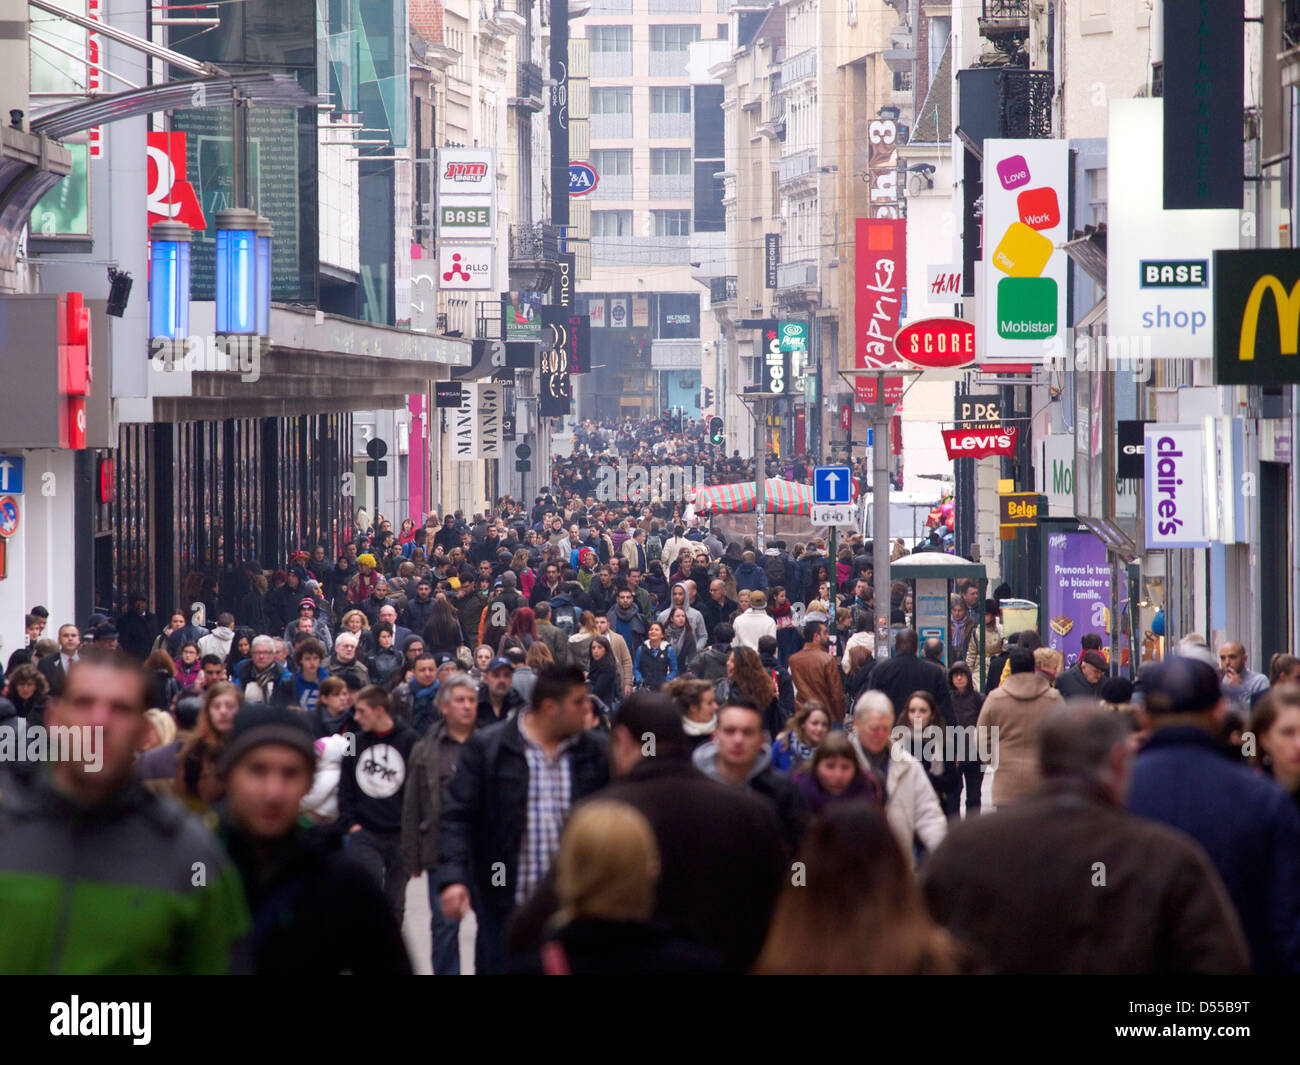 Nieuwstraat shopping street full of people. Brussels, Belgium Stock Photo